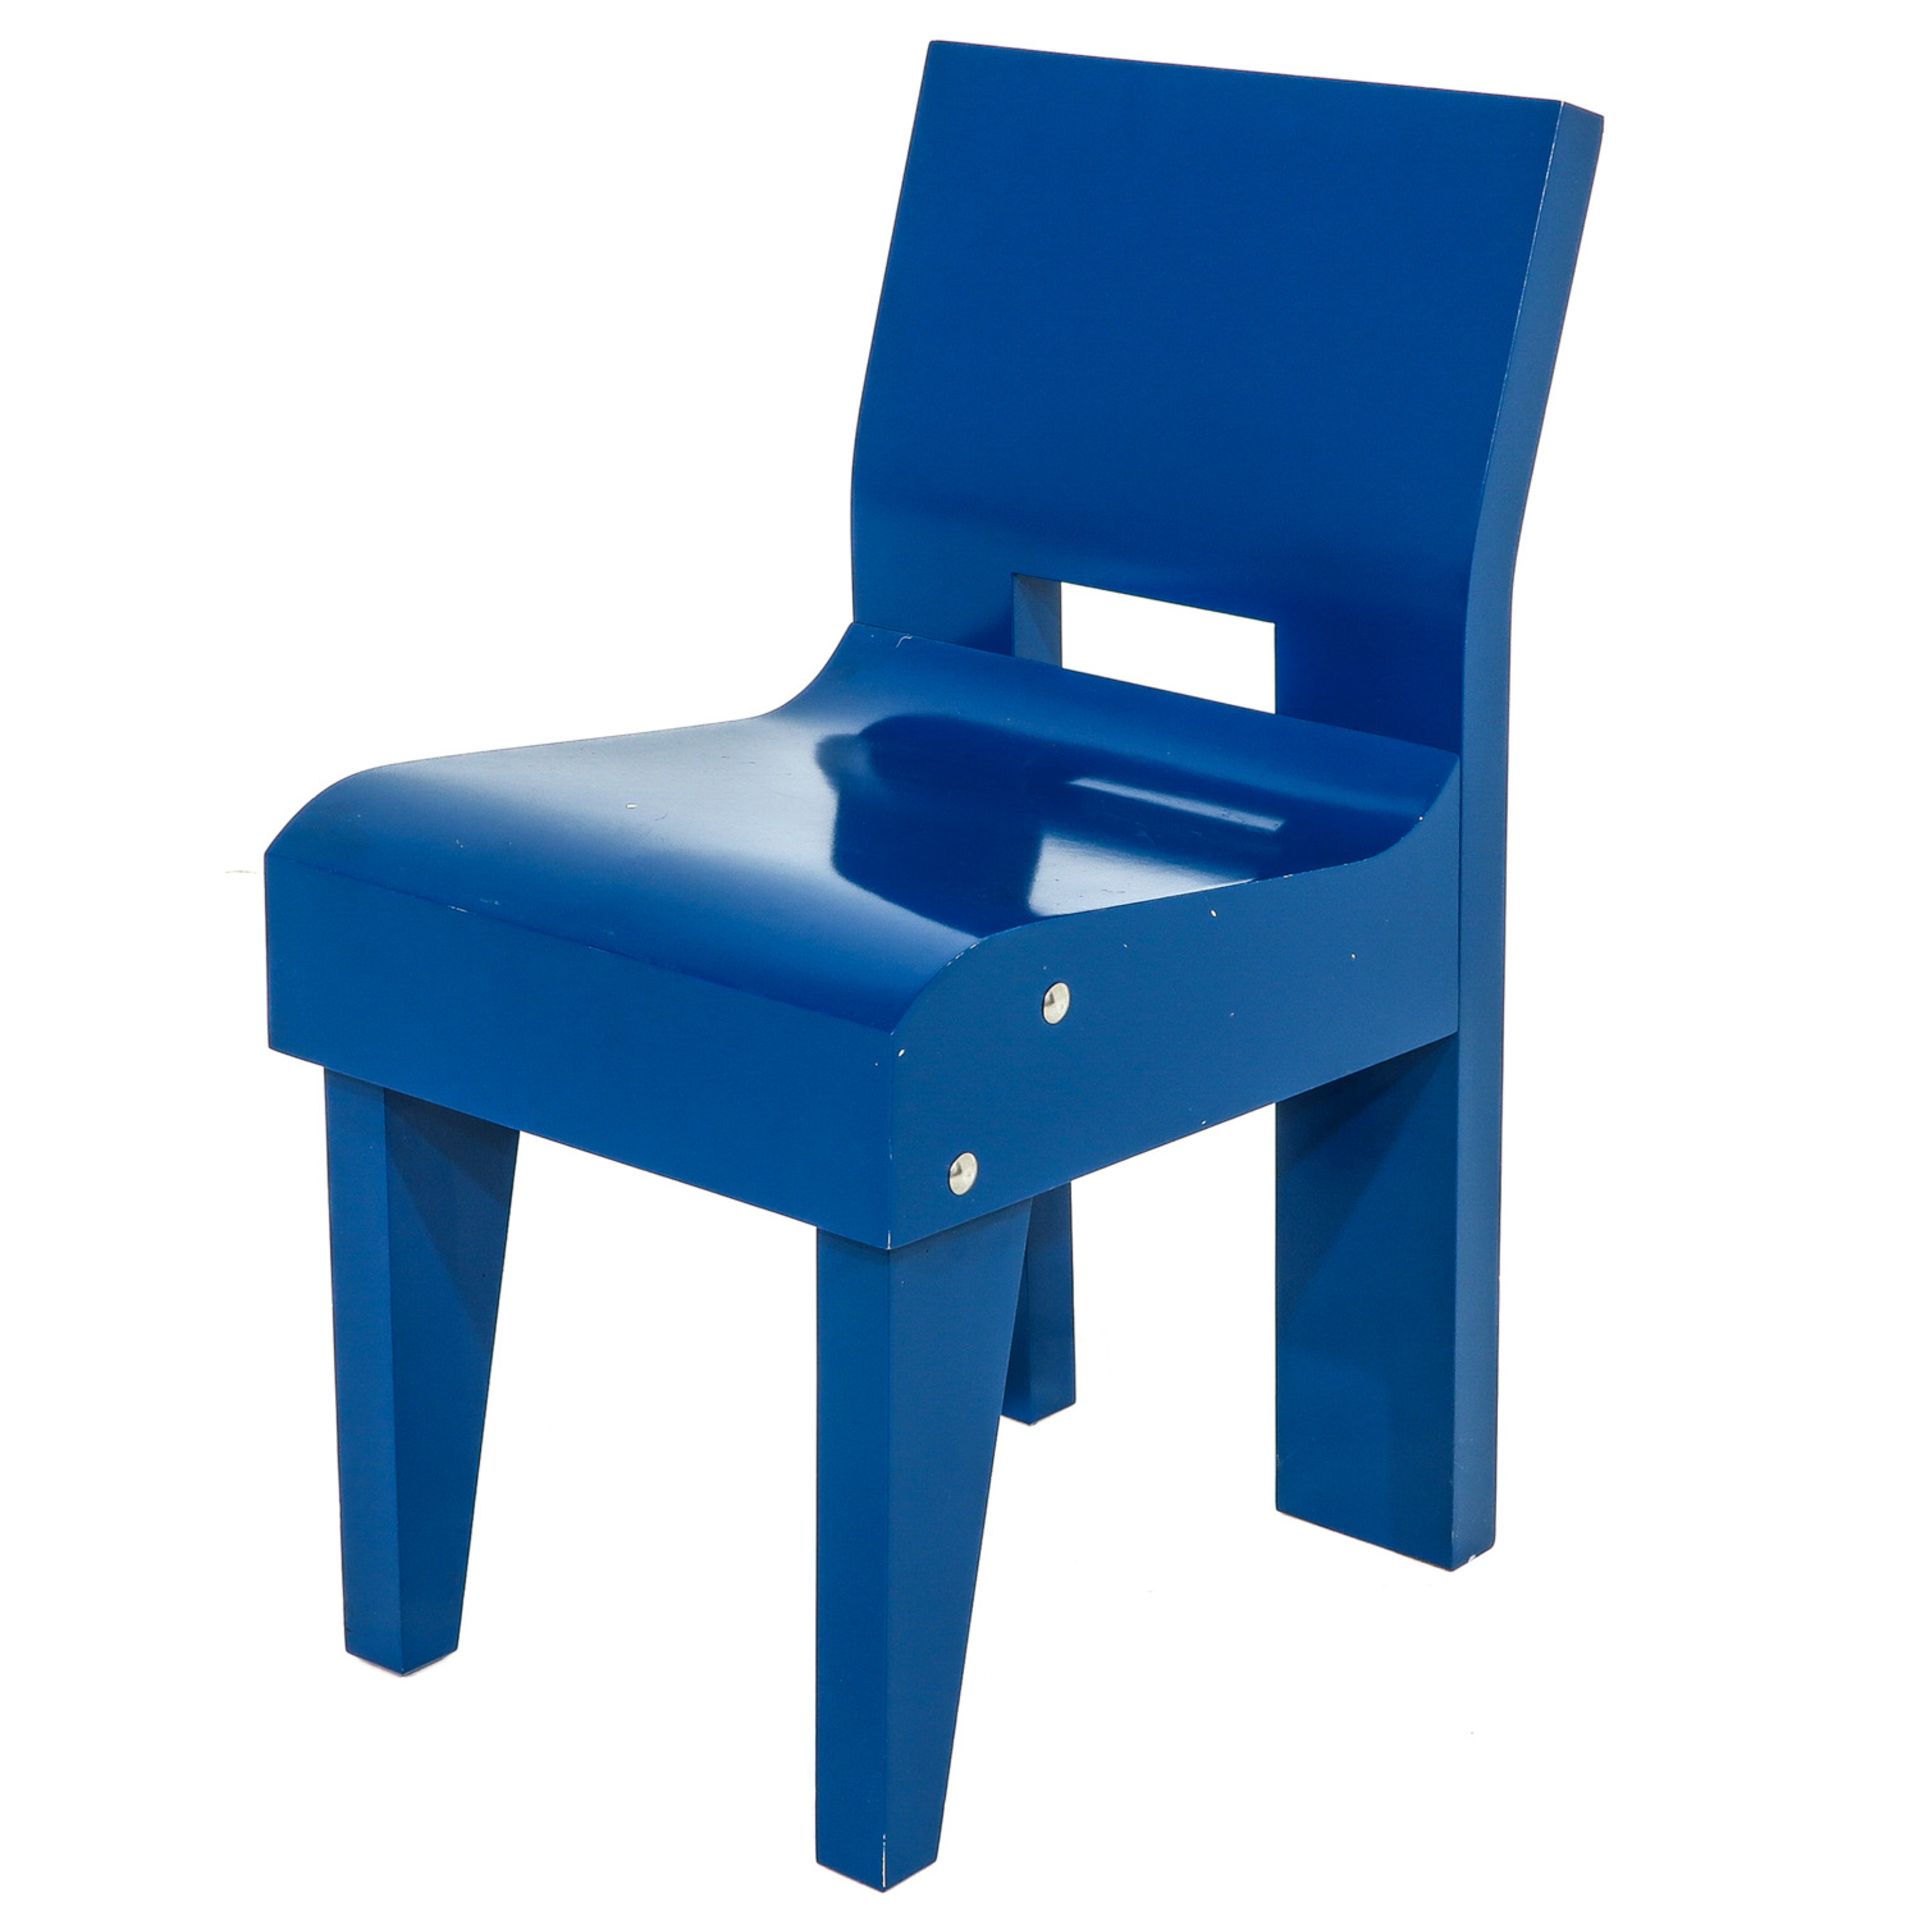 A Martin Visser Design Chair